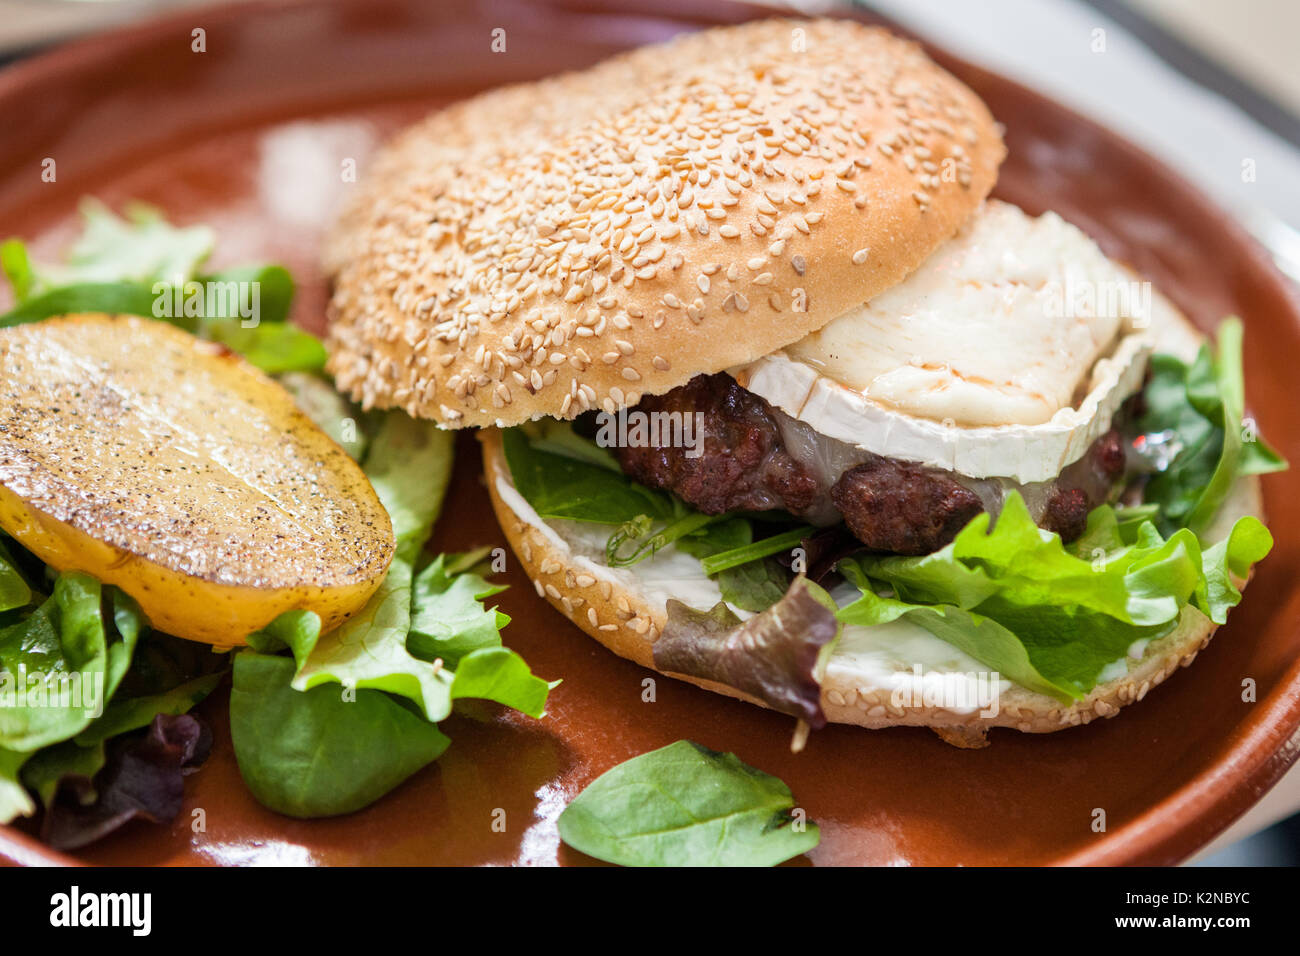 Hamburger with feta cheese Stock Photo - Alamy